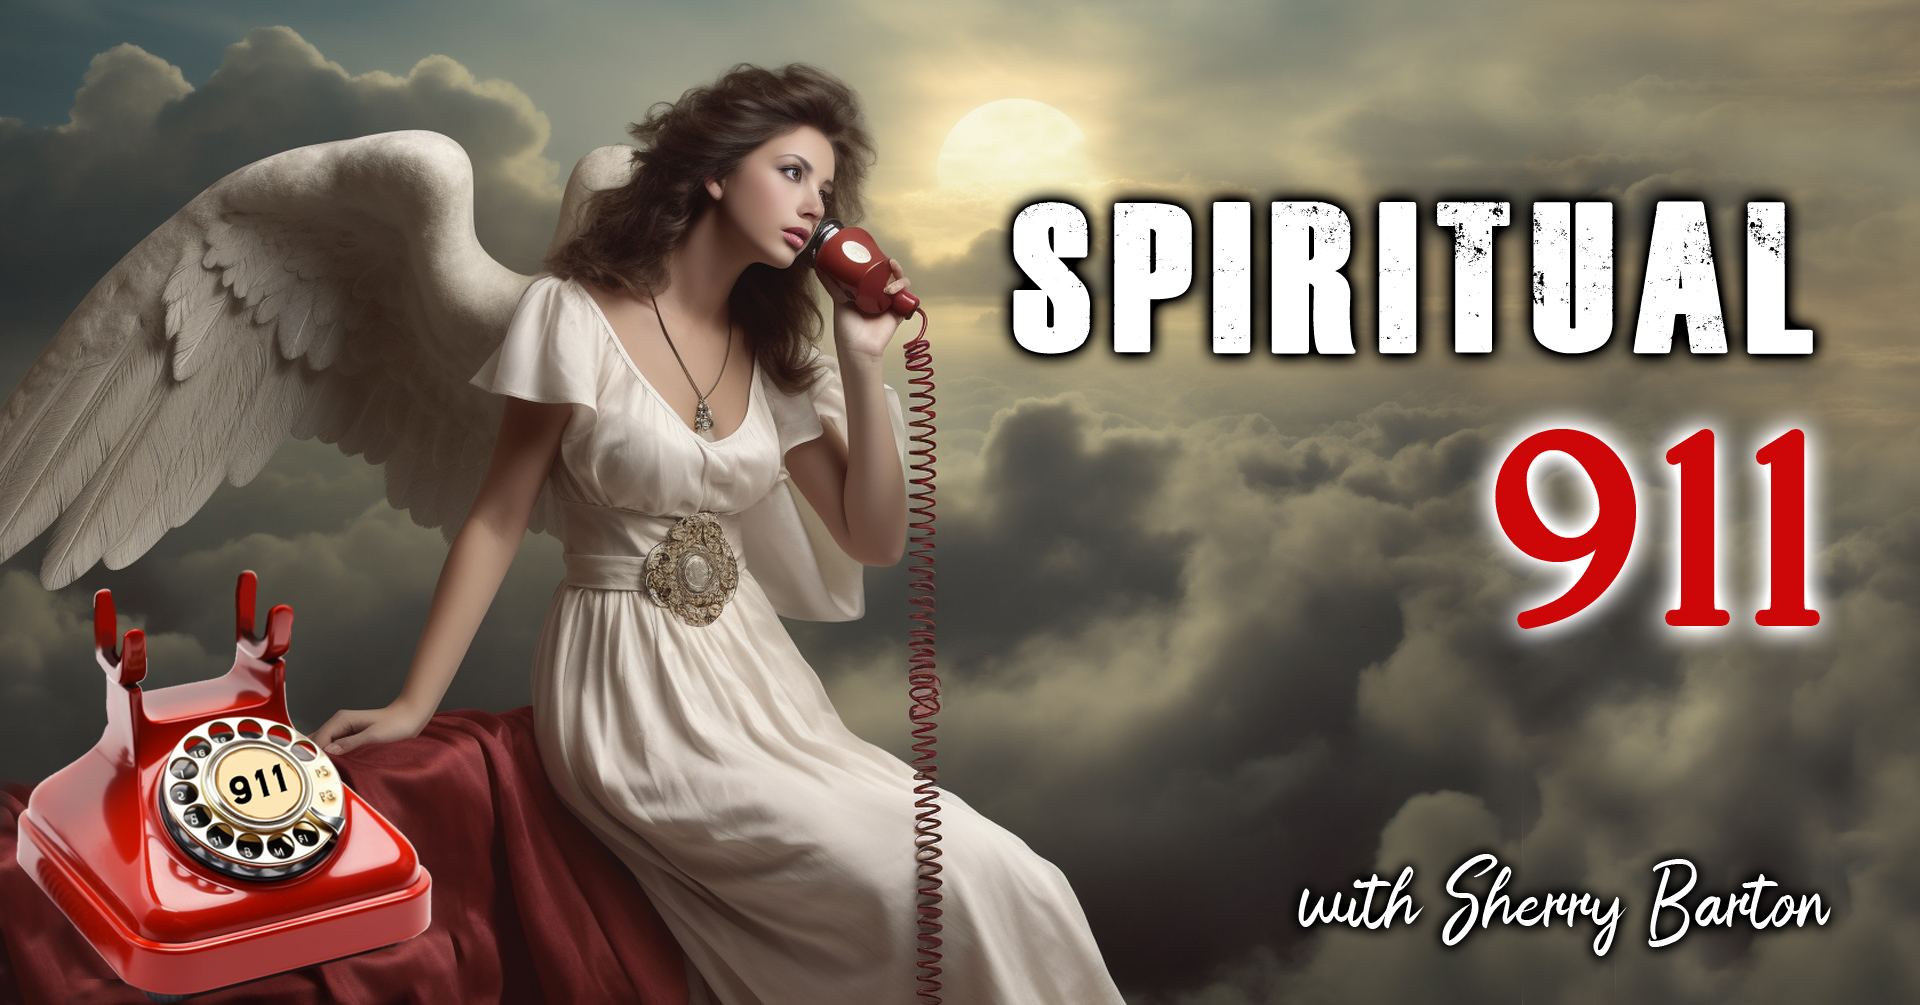 Spiritual 911 with Sherry Barton - Jan 9 +20